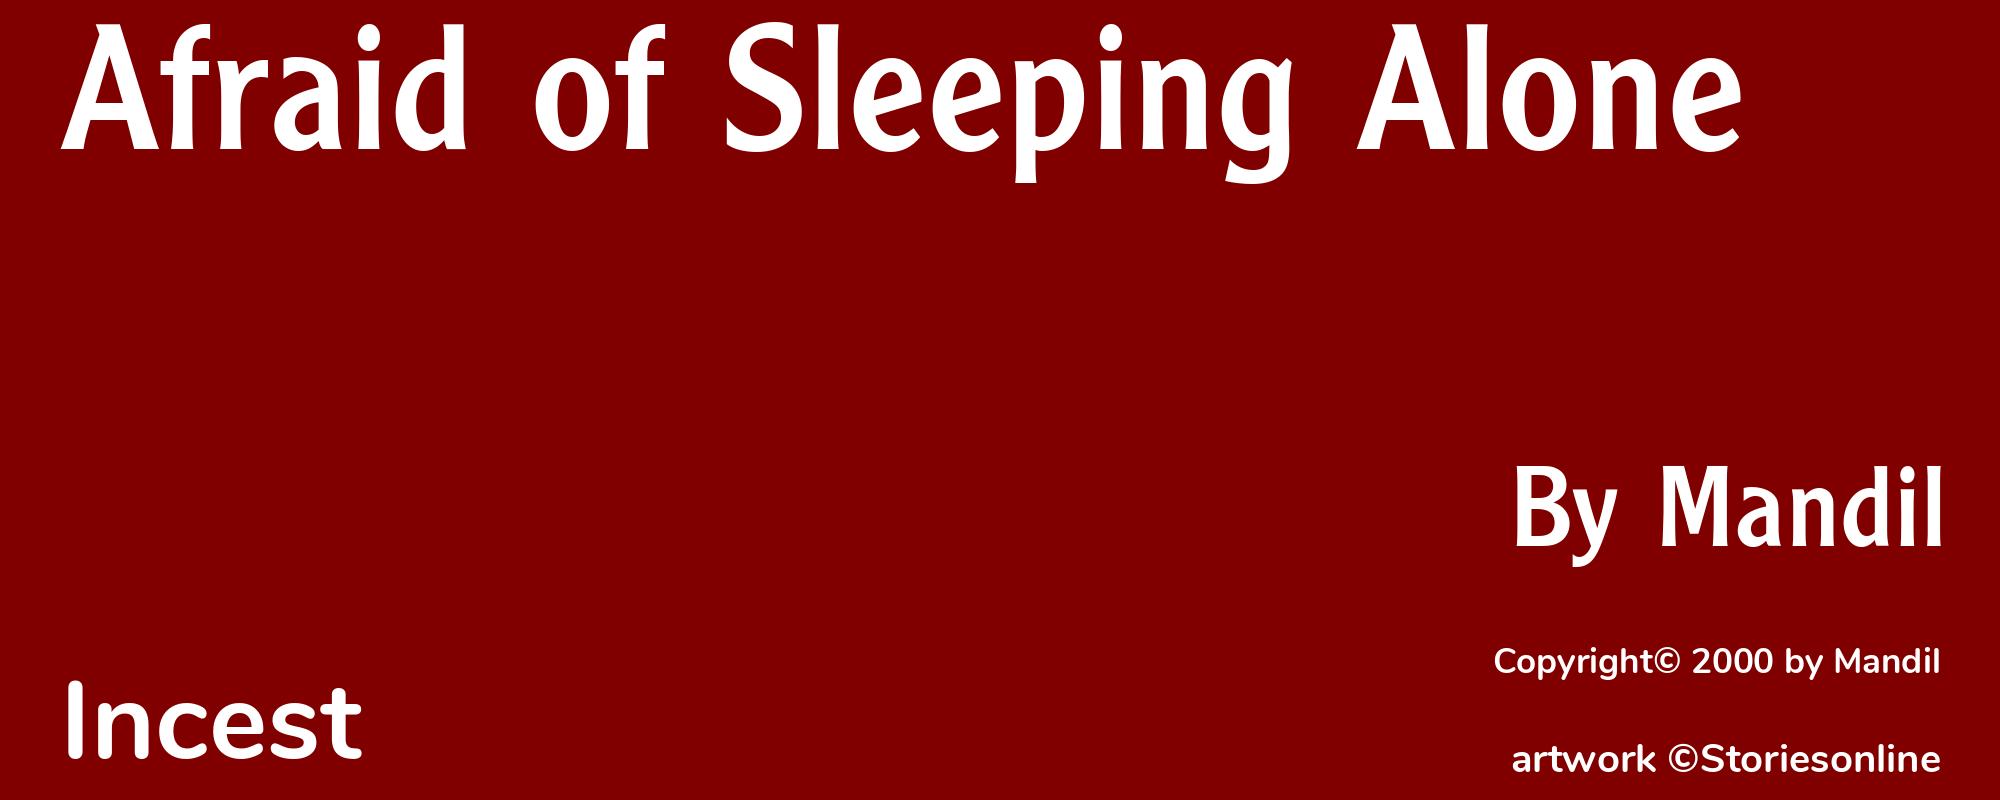 Afraid of Sleeping Alone - Cover